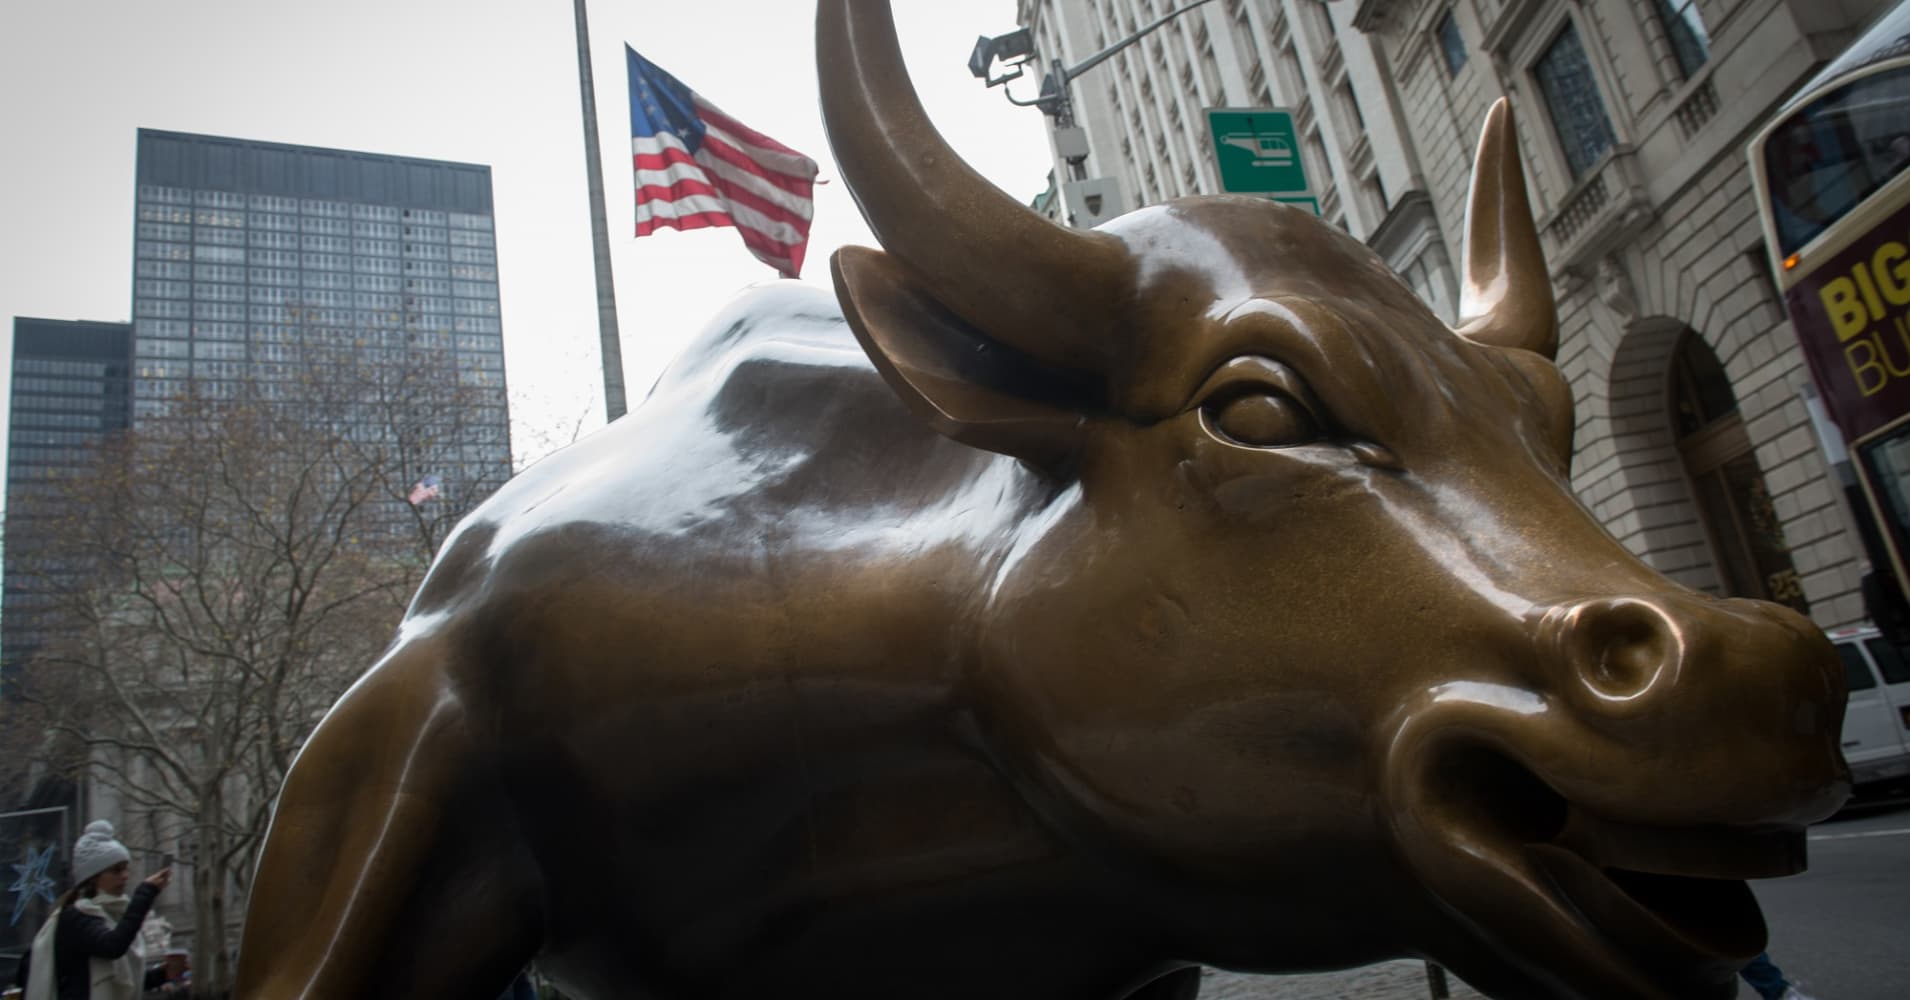 The Wall Street Bull sculpture.